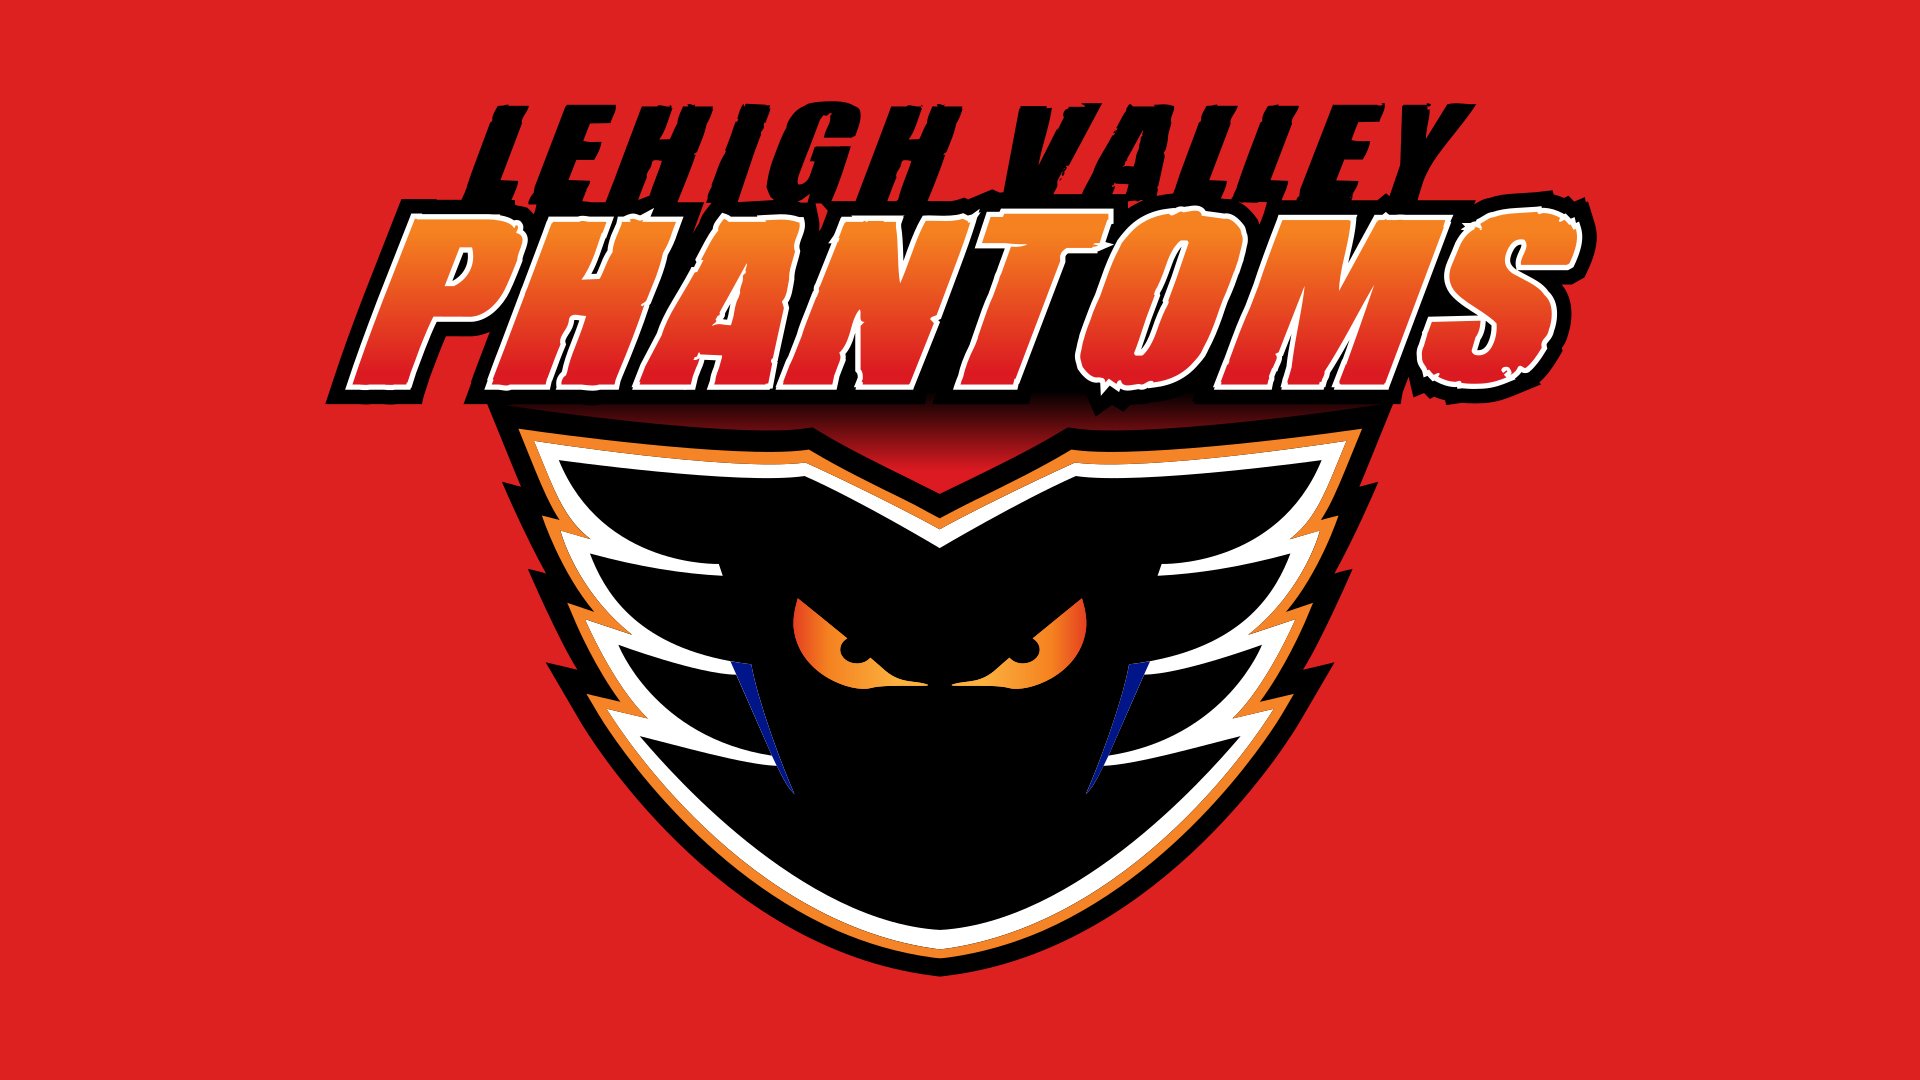 Lehigh Valley Phantoms Jersey Logo - American Hockey League (AHL